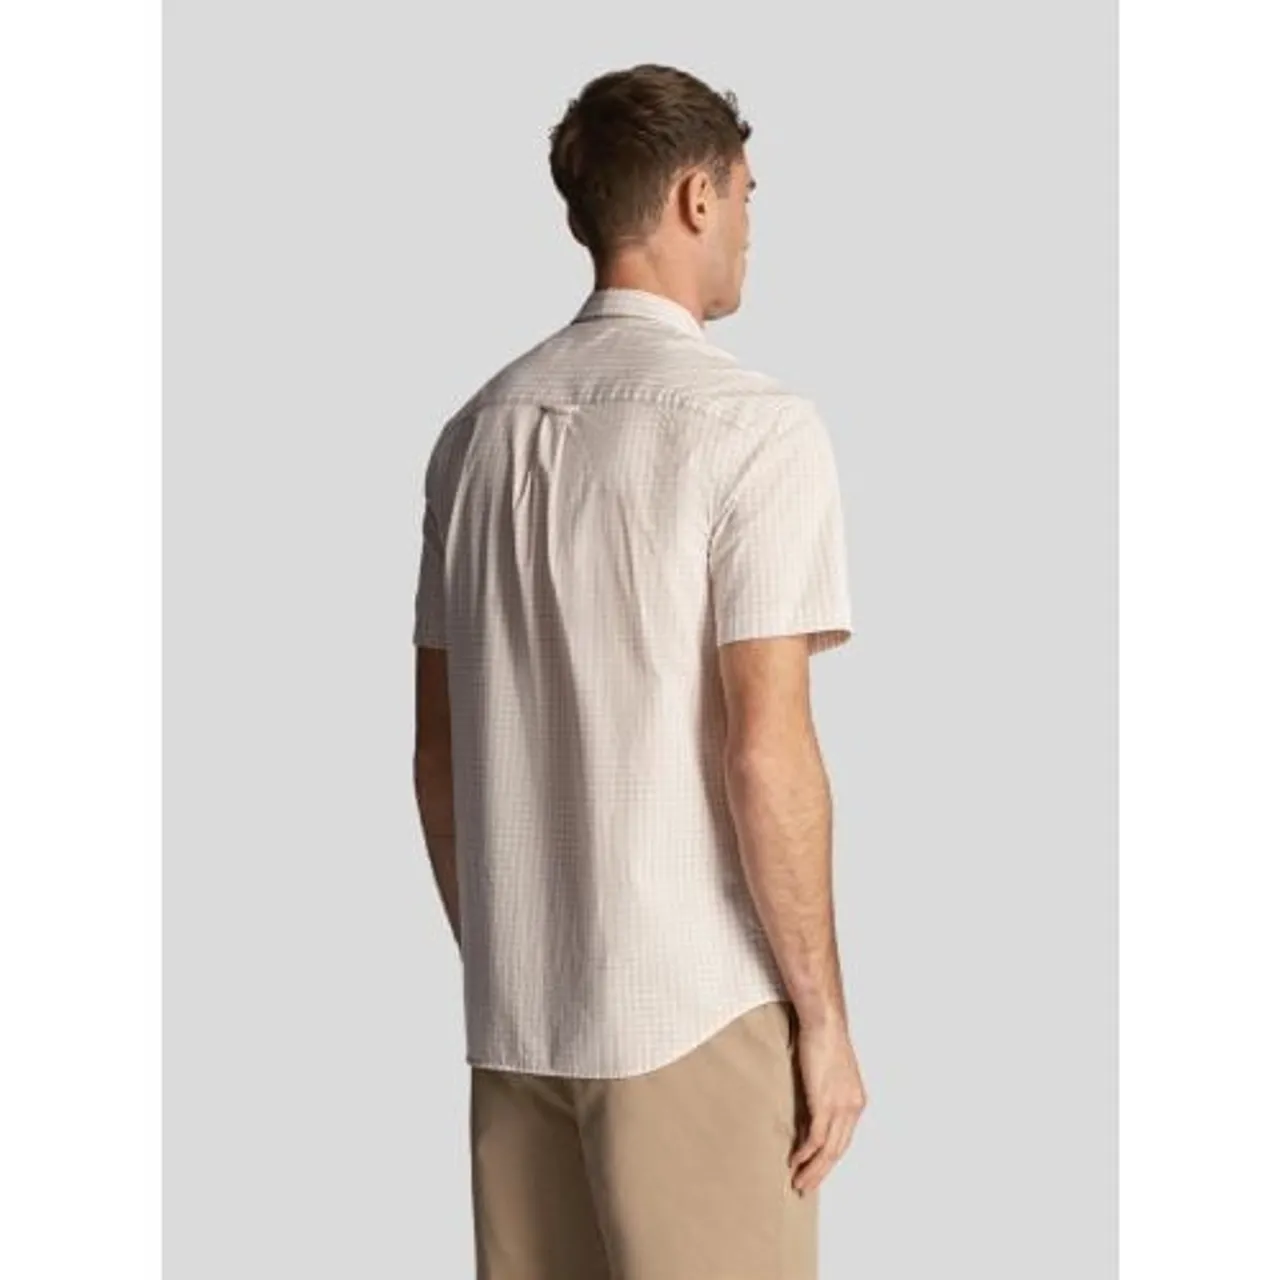 Lyle and Scott Mens Cove White Short Sleeve Slim Fit Gingham Shirt